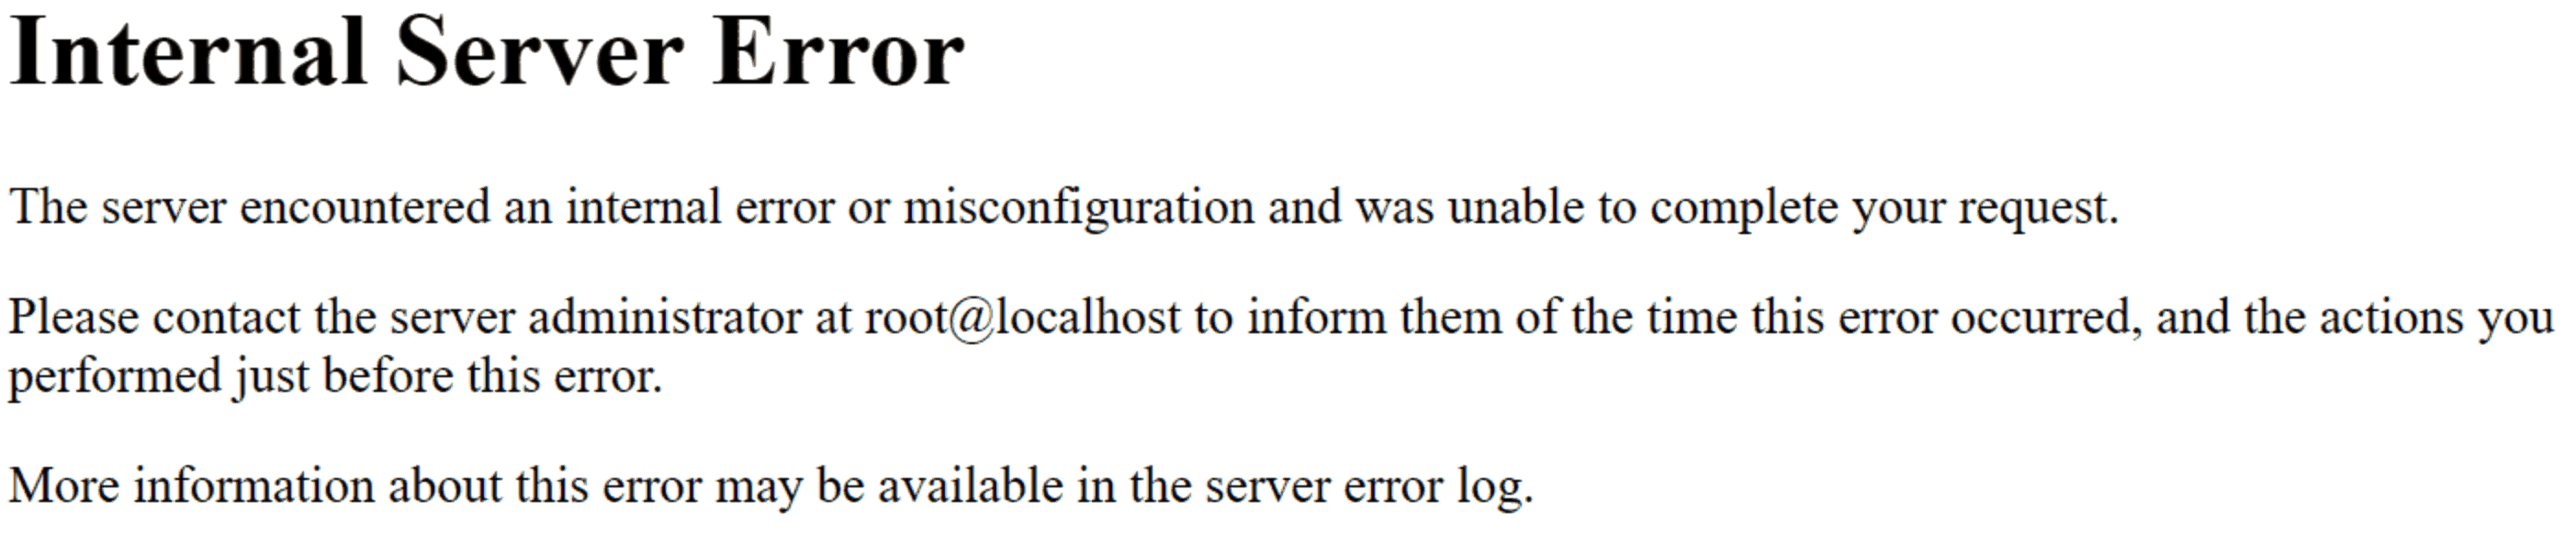 The Internal Server Error message.